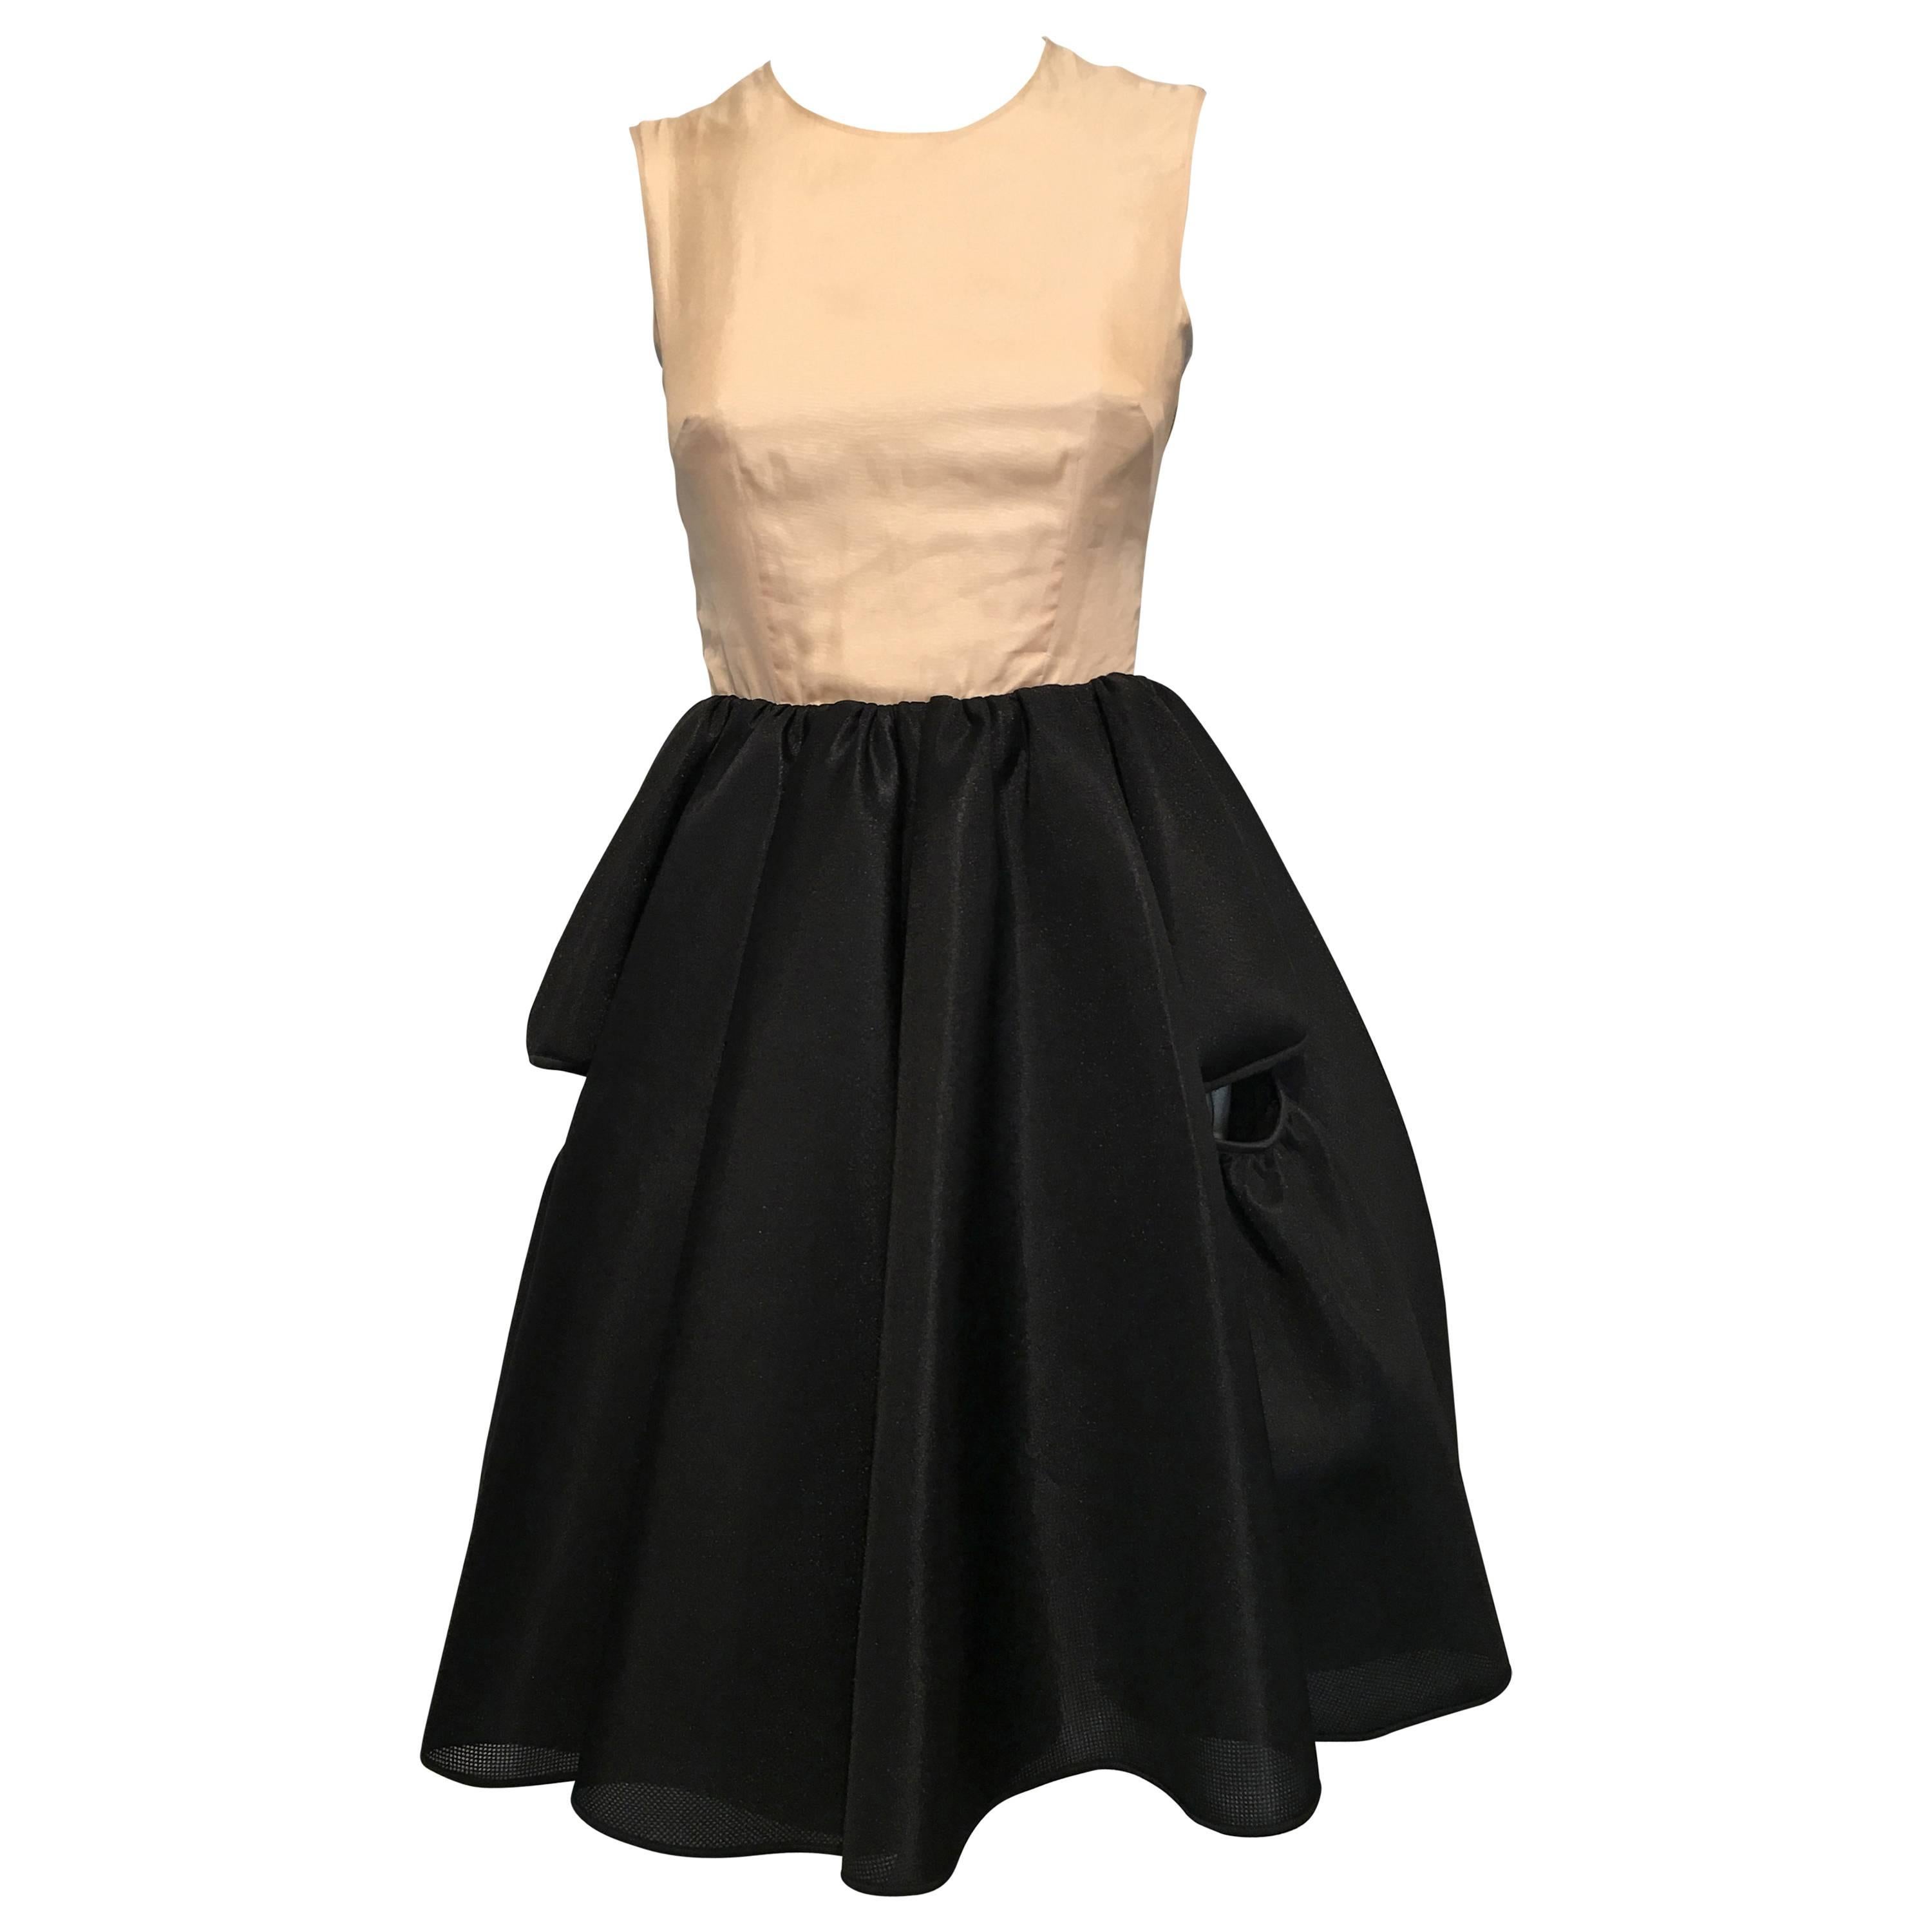 Simone Rocha Dress size 8(4) For Sale